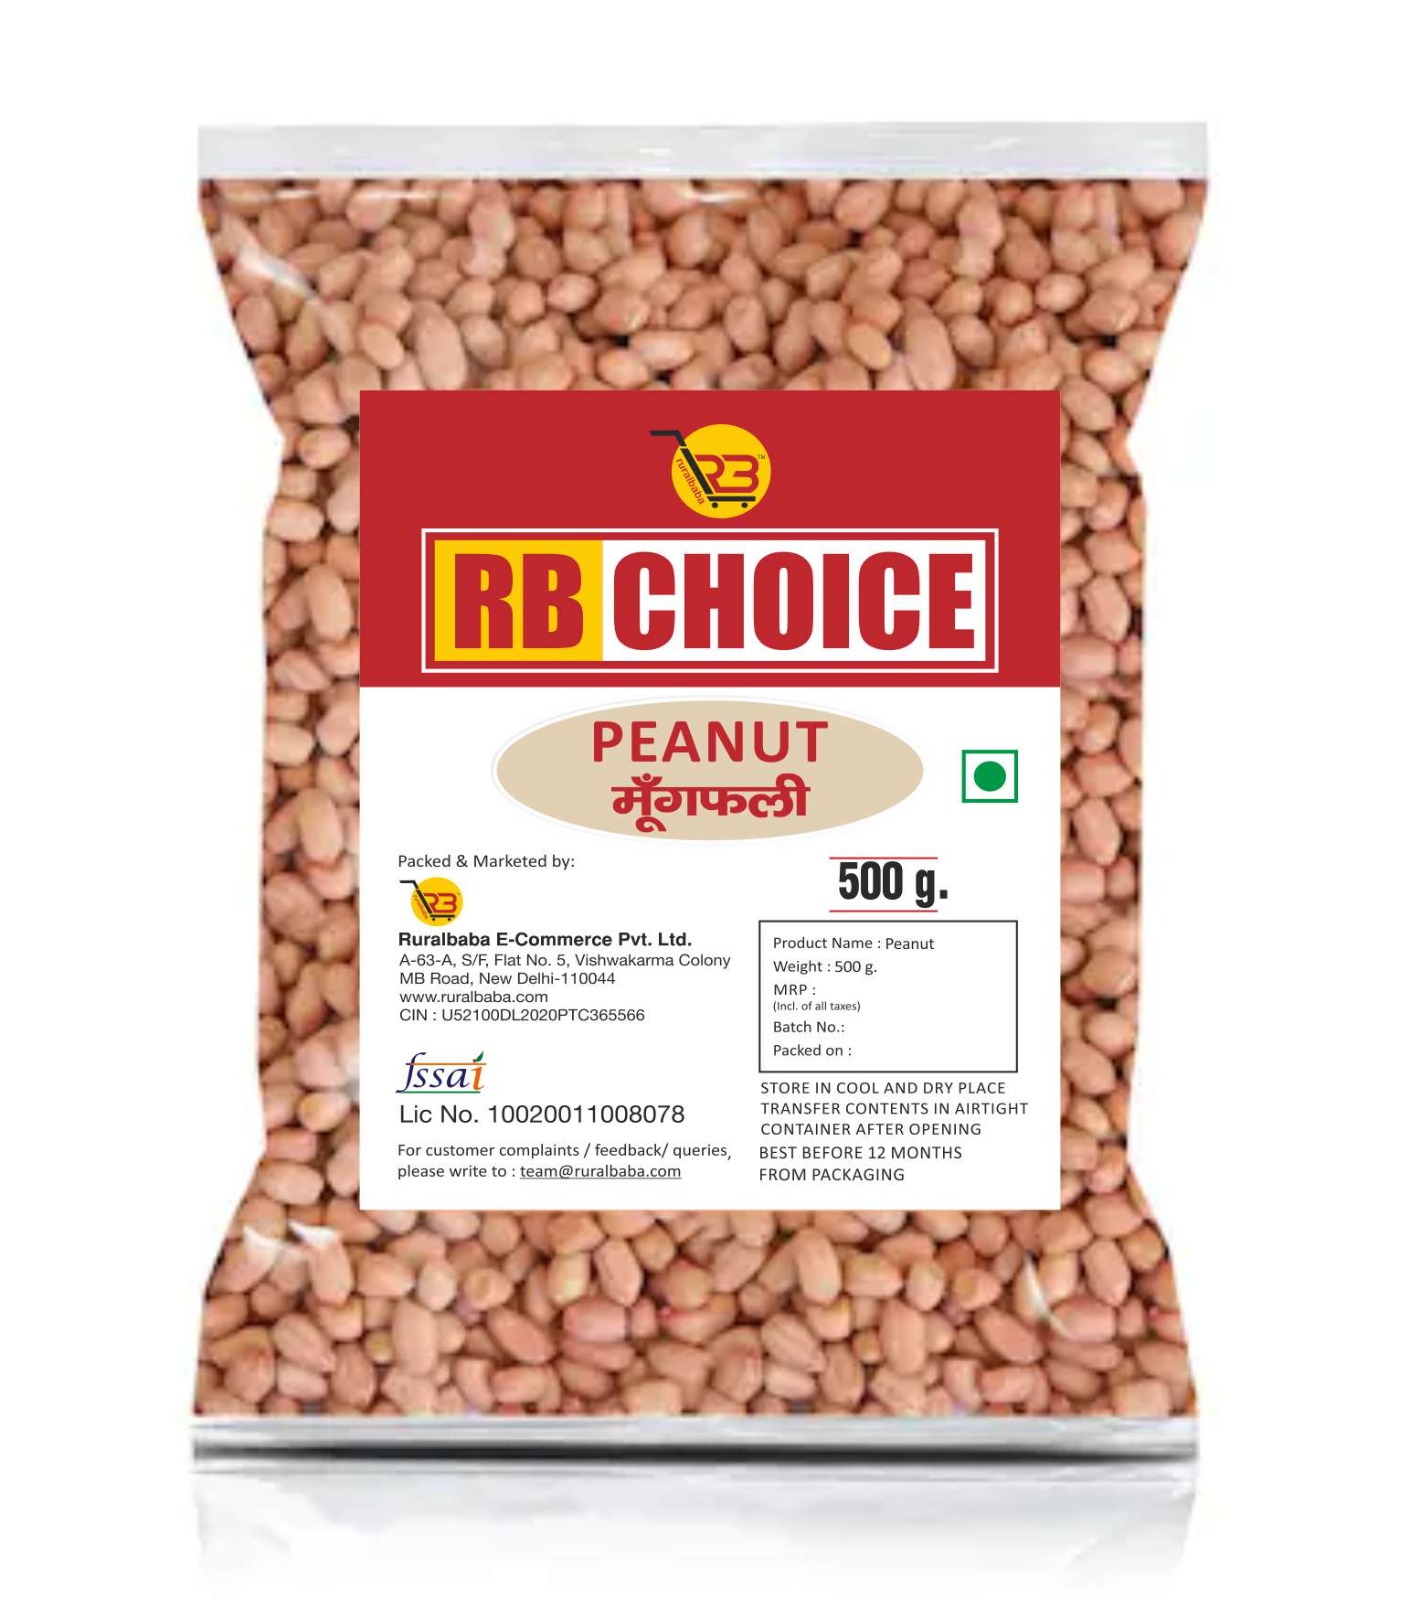 RB CHOICE, Peanut | 500g